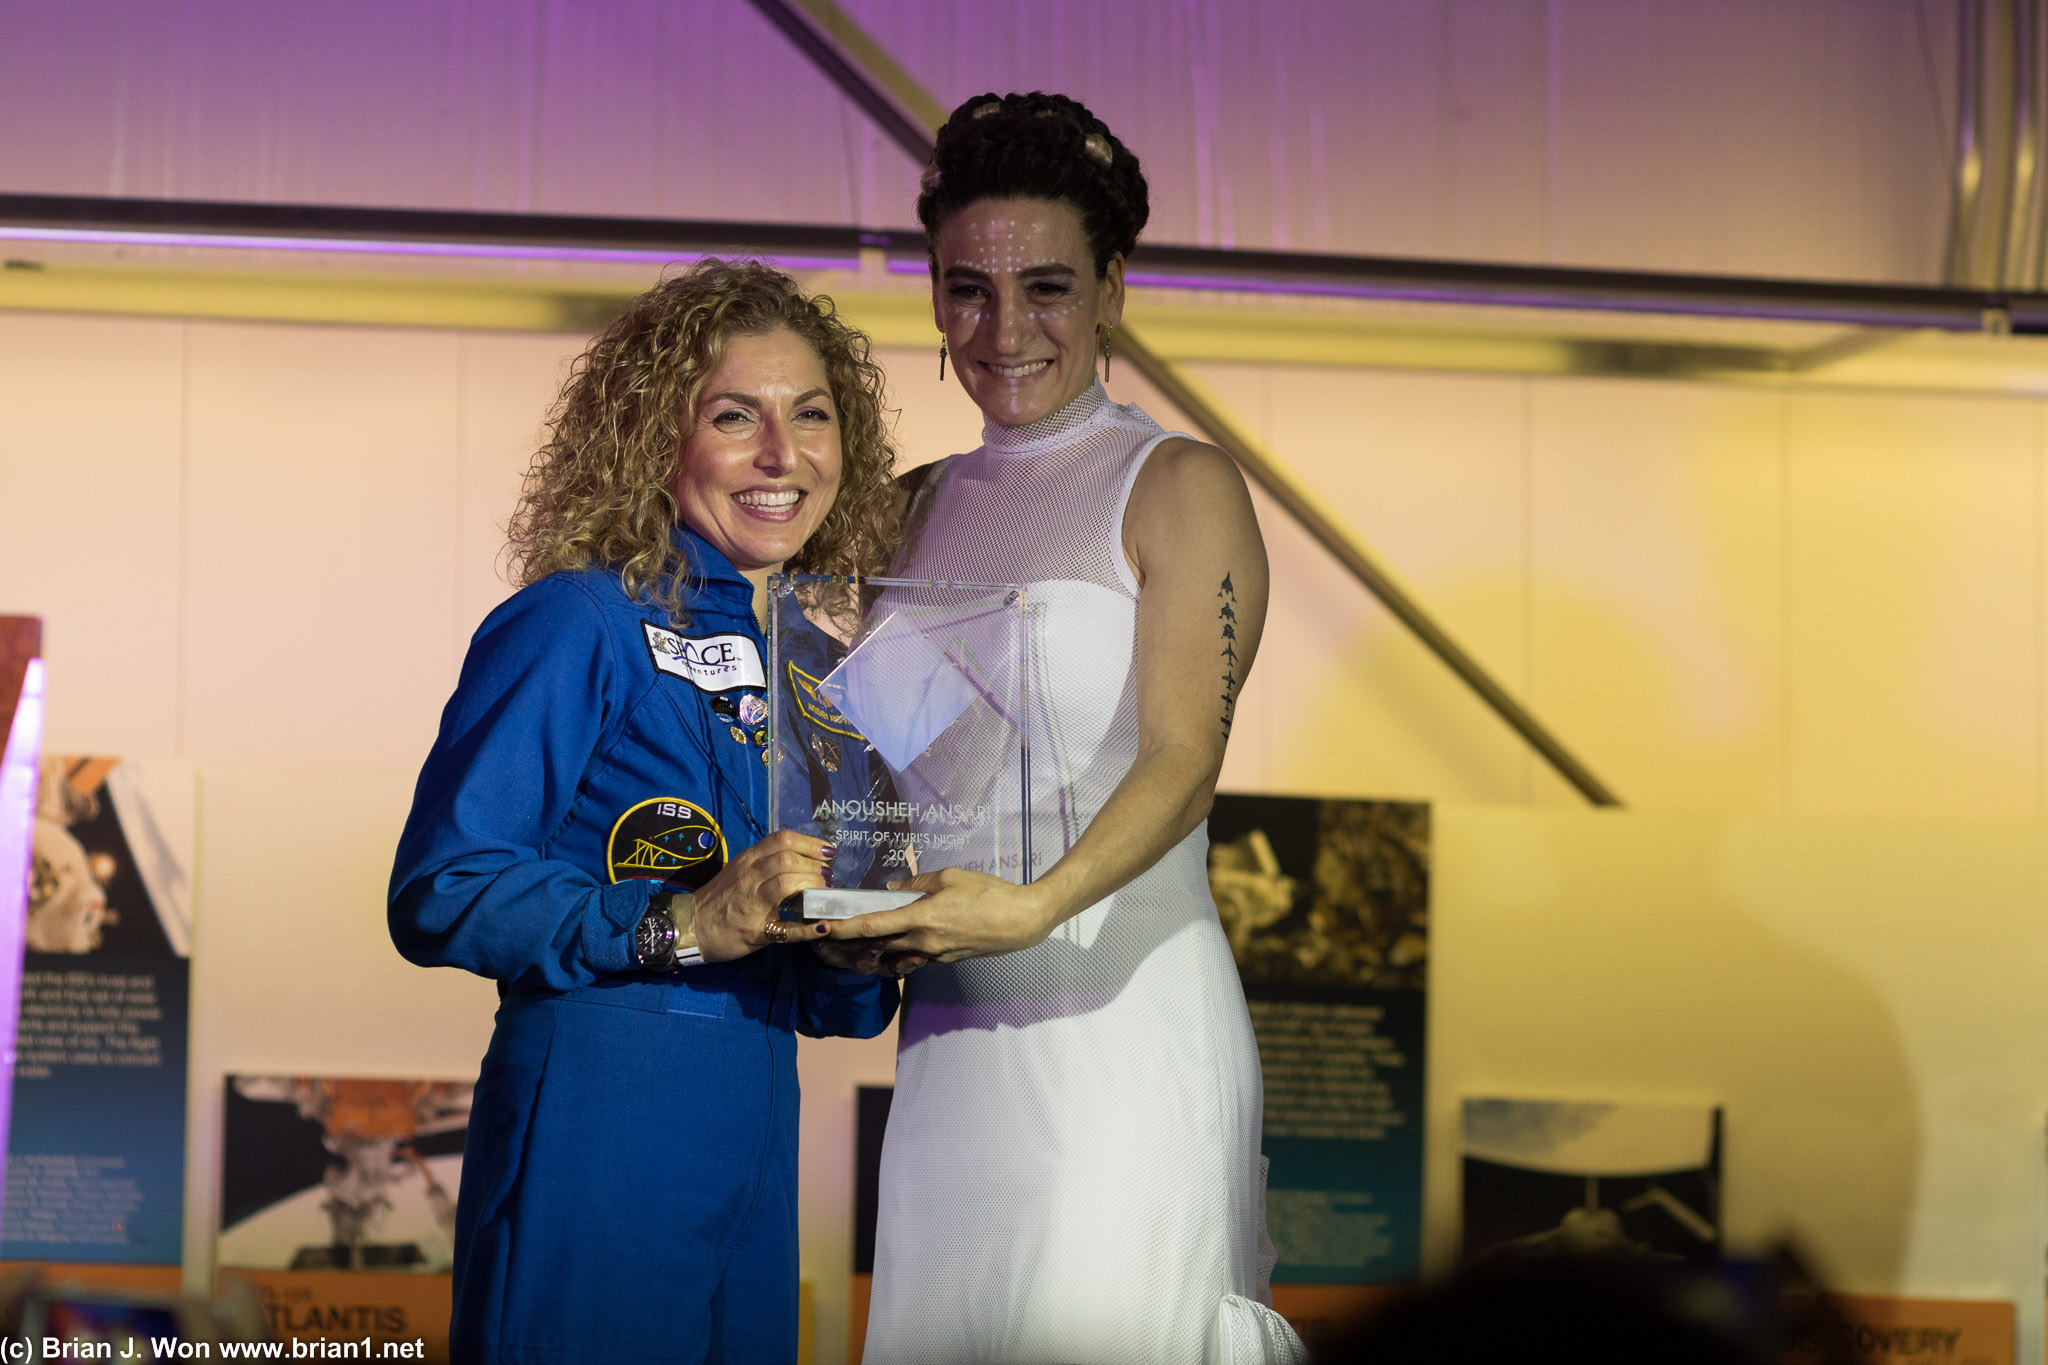 Presenting an award to Astronaut Anoushesh Anzari.